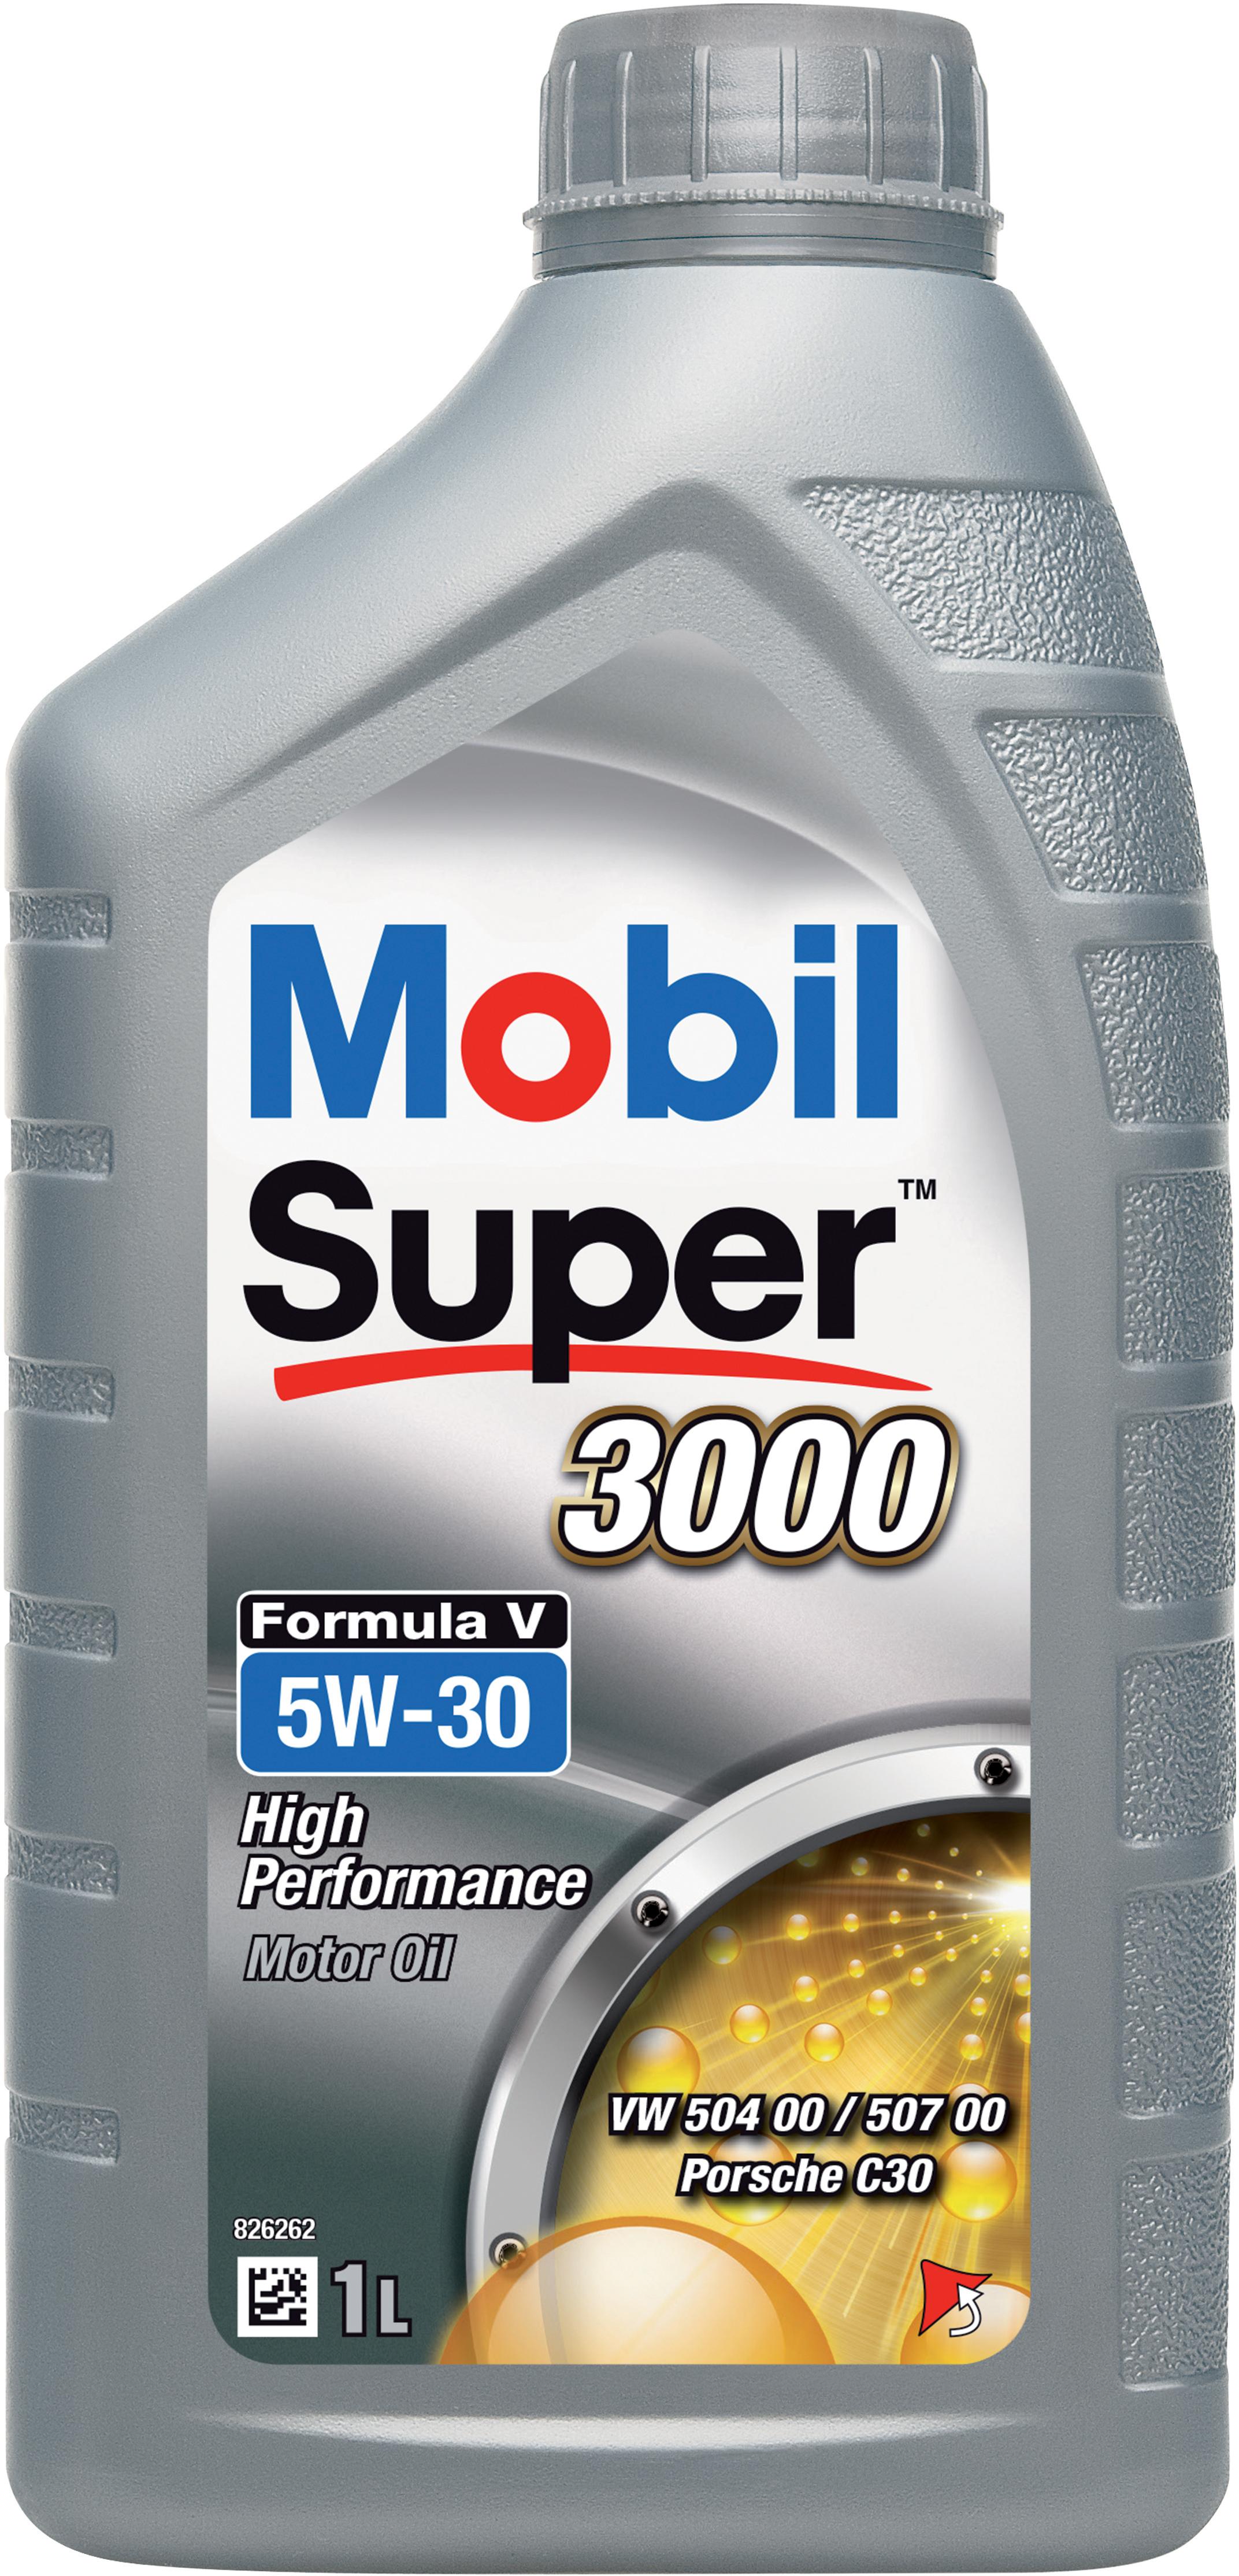 Mobil Super 3000 Formula V 5W-30 Oil 1L